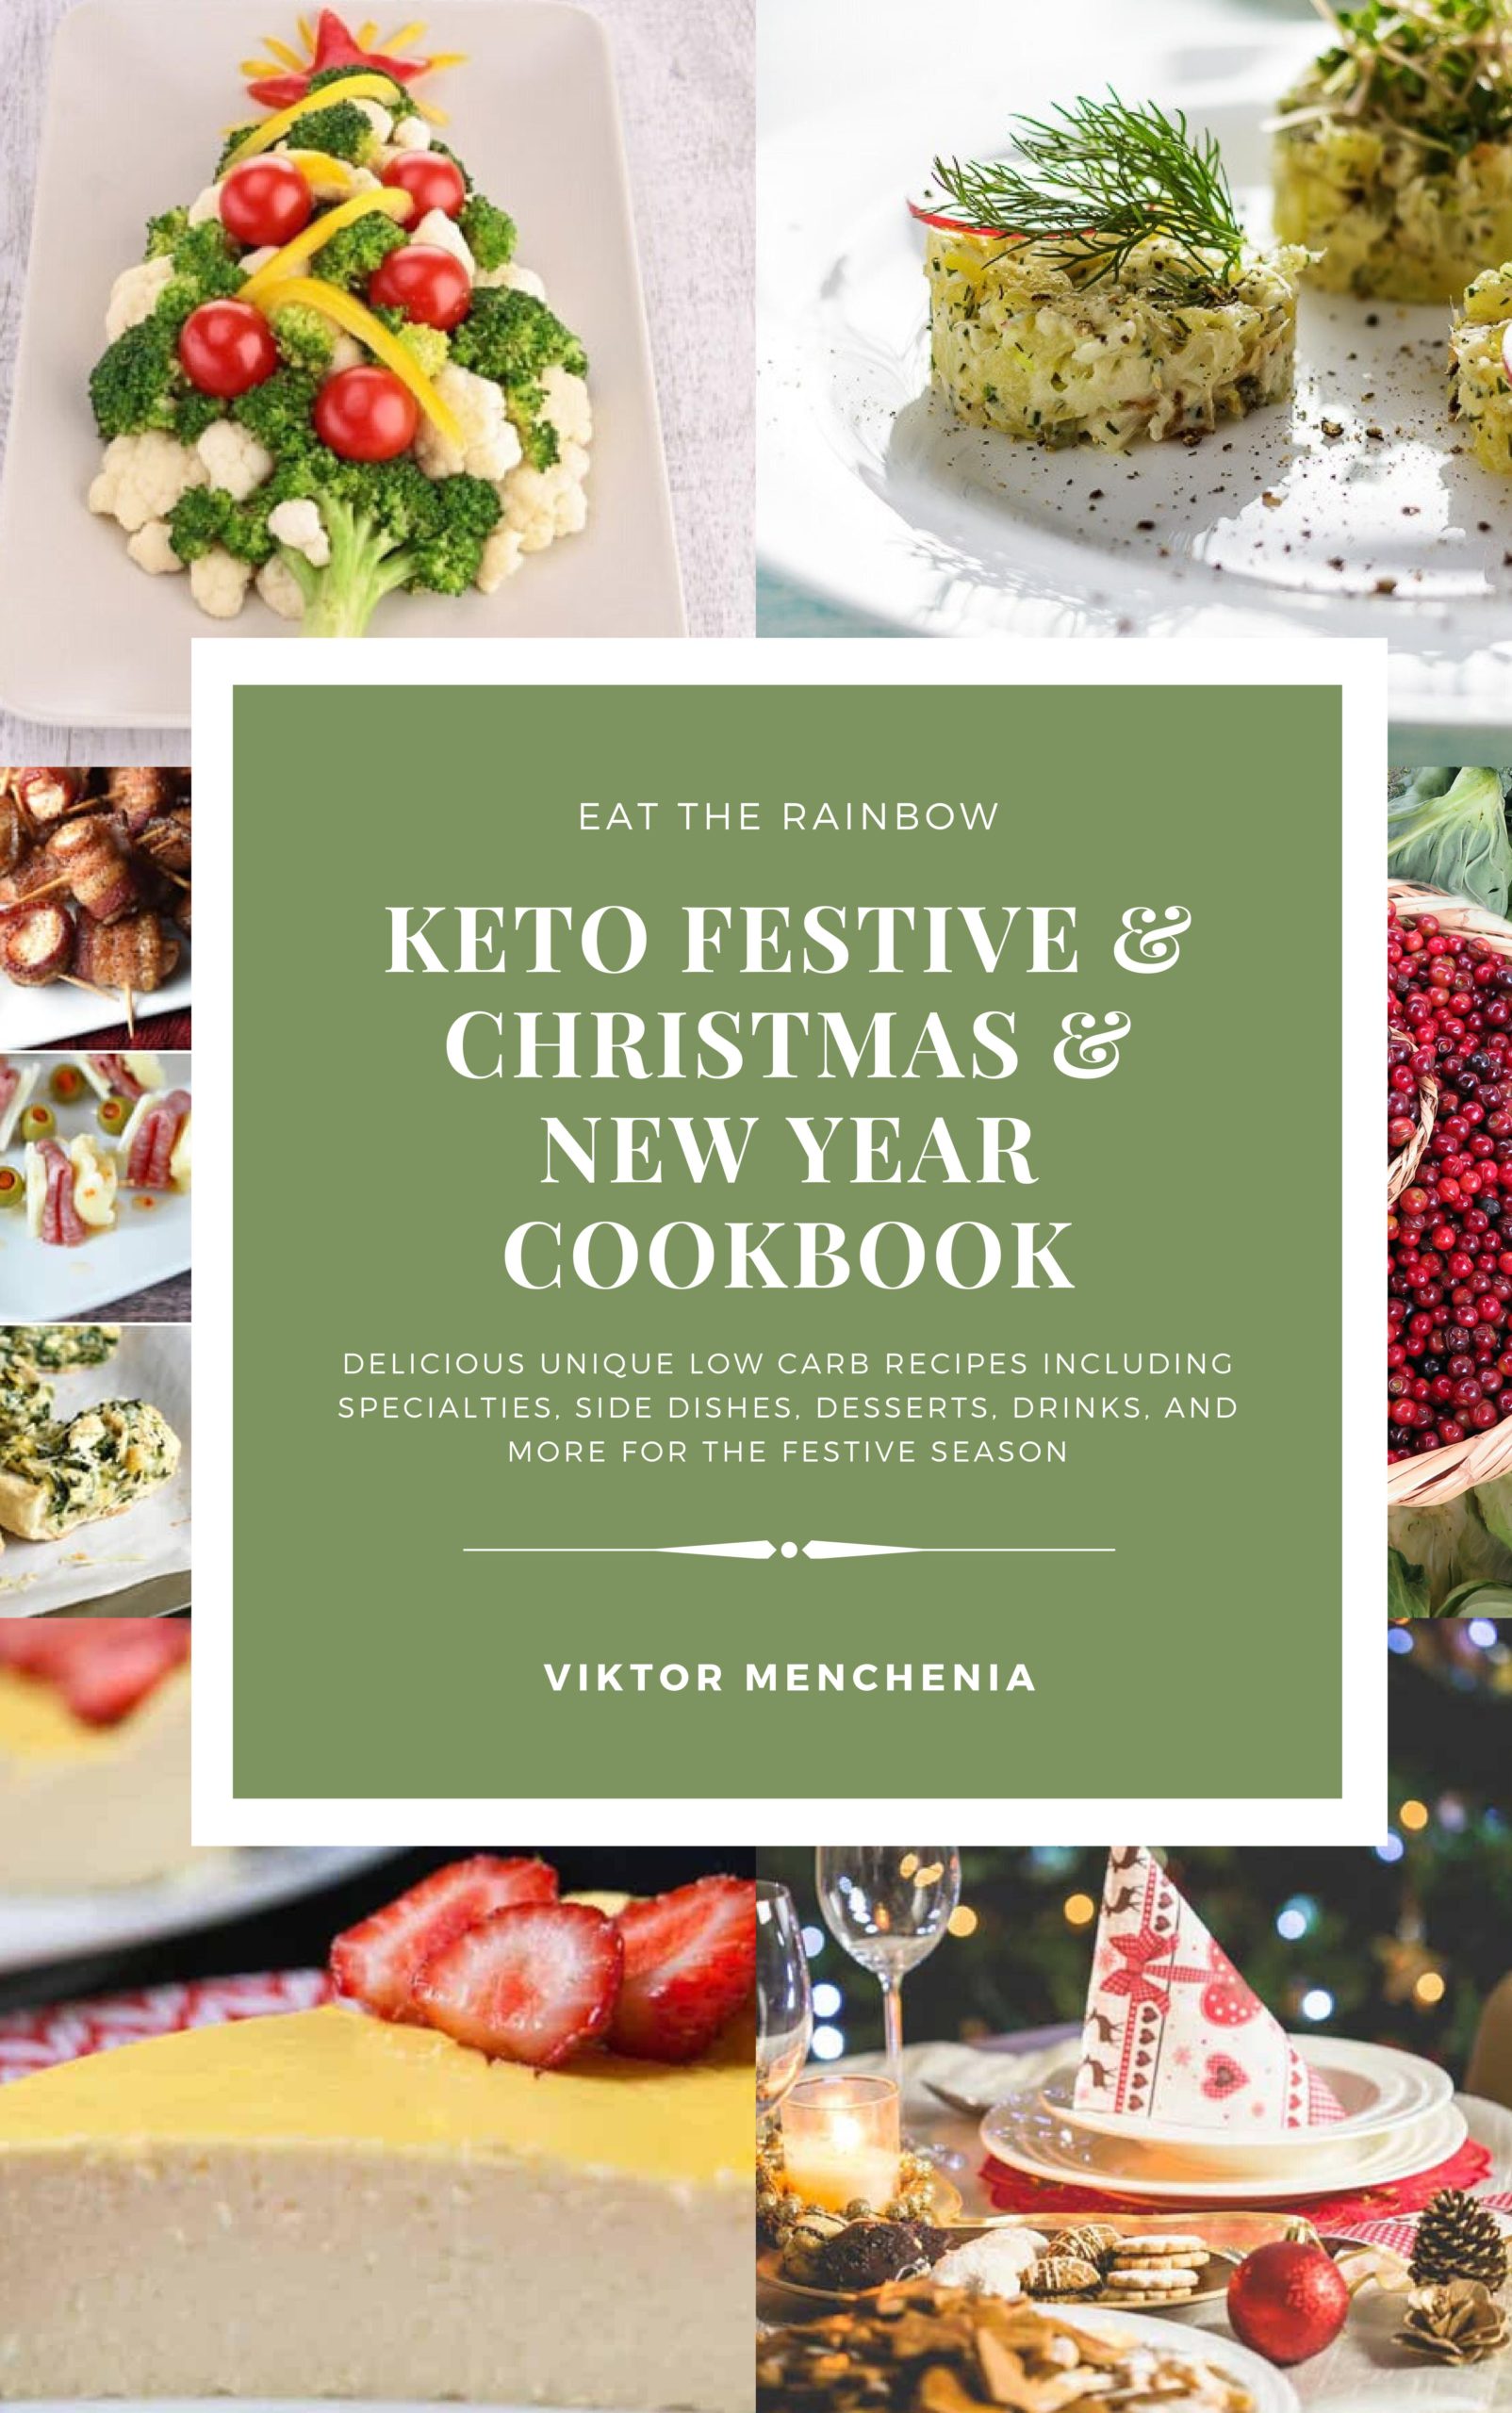 FREE: Keto Festive & Christmas & New Year Cookbook by Viktor Menchenia